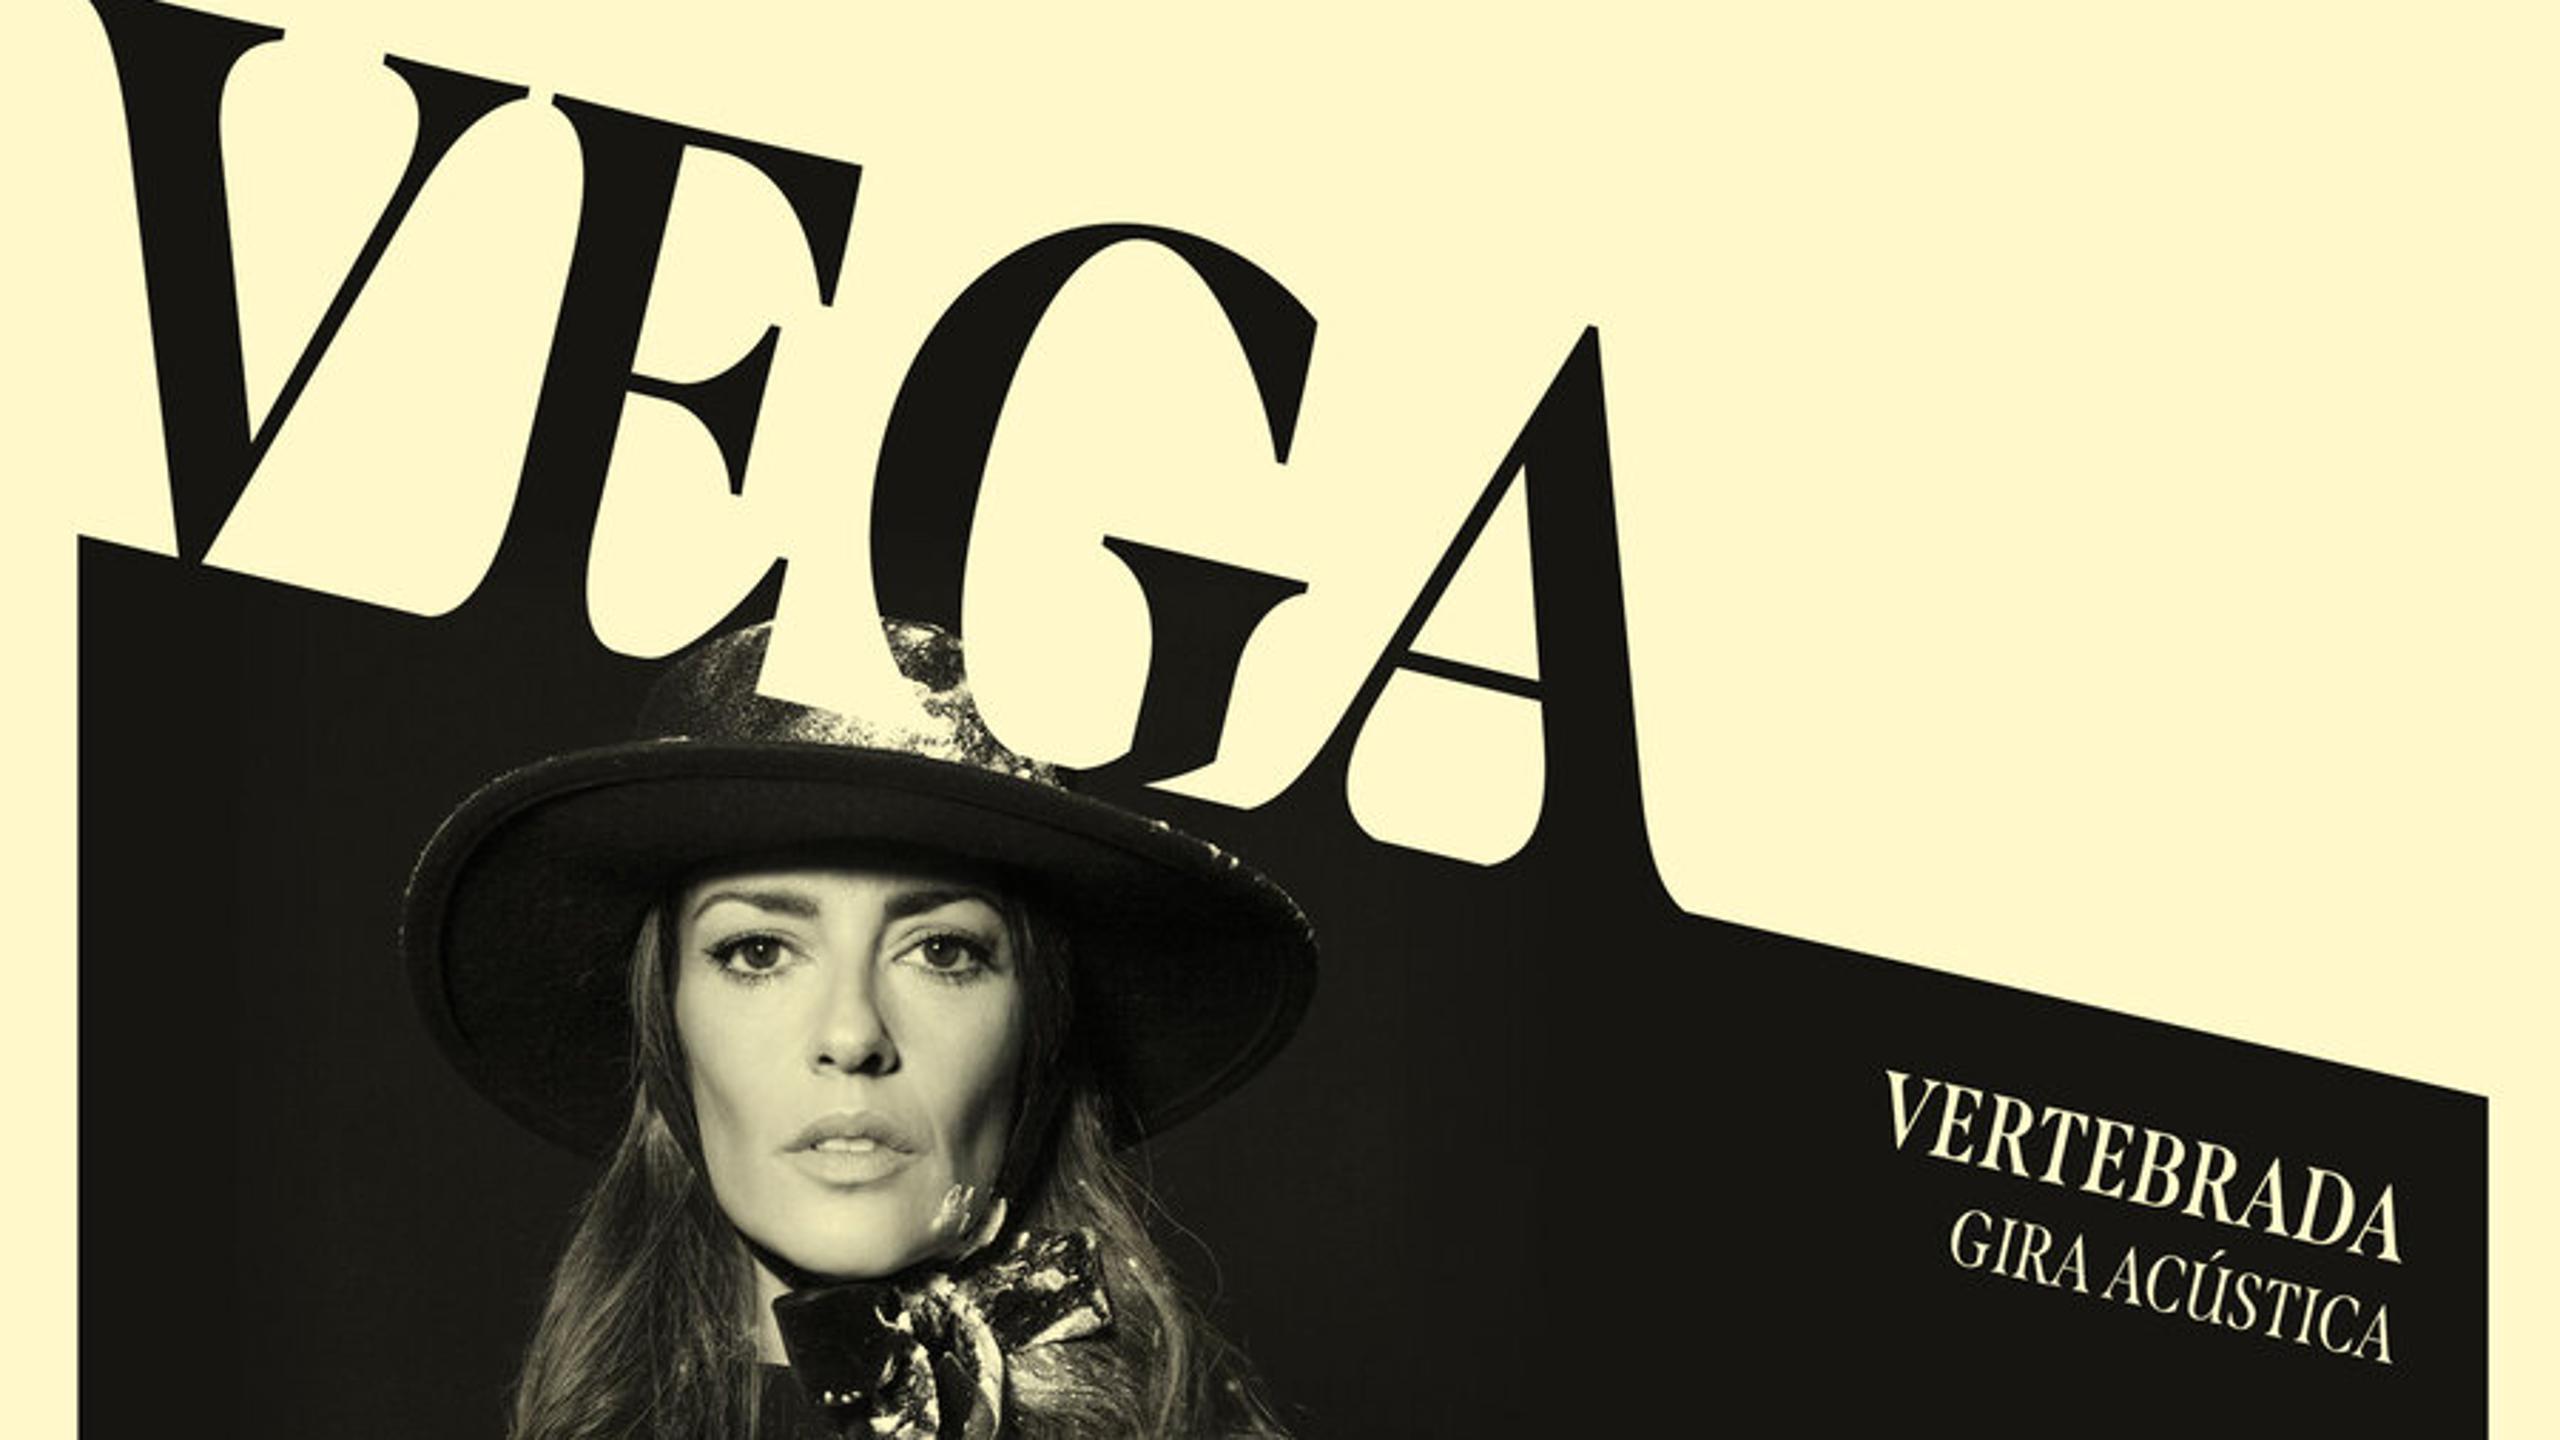 vega tour dates